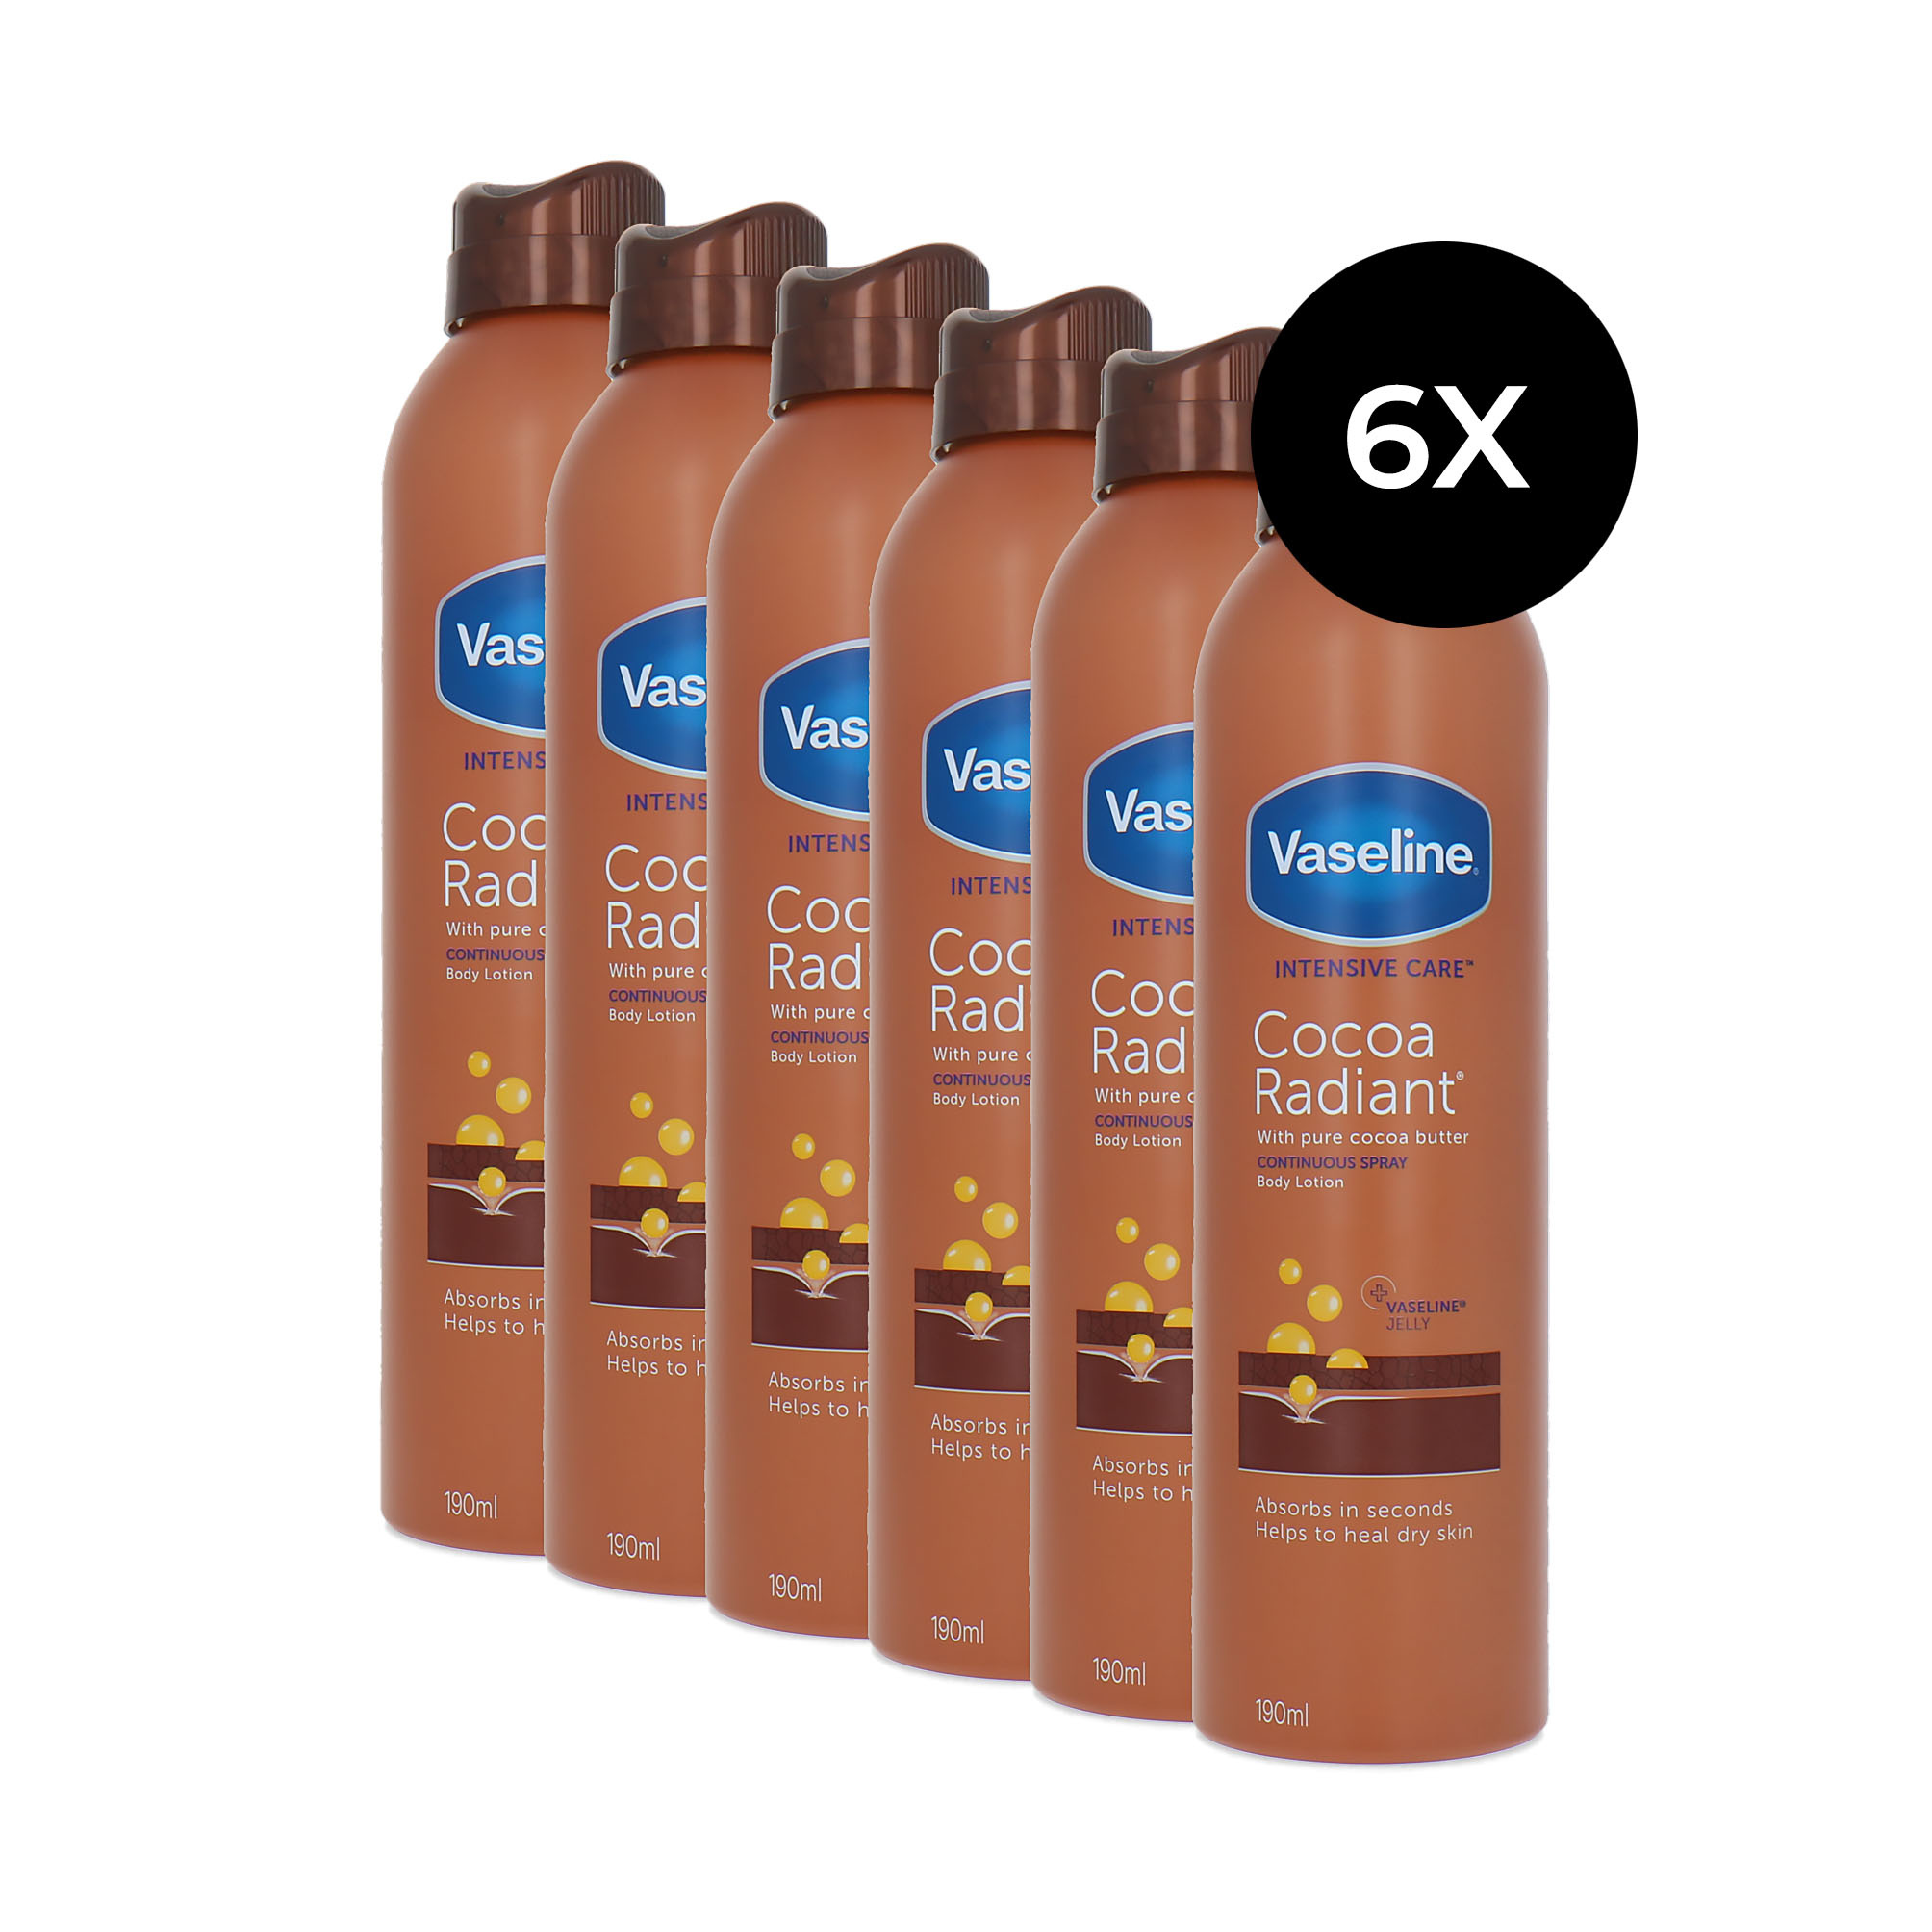 Vaseline Intensive Care Cocoa Radiant Continuous Spray Lotion pour le corps - 6 x 190 ml